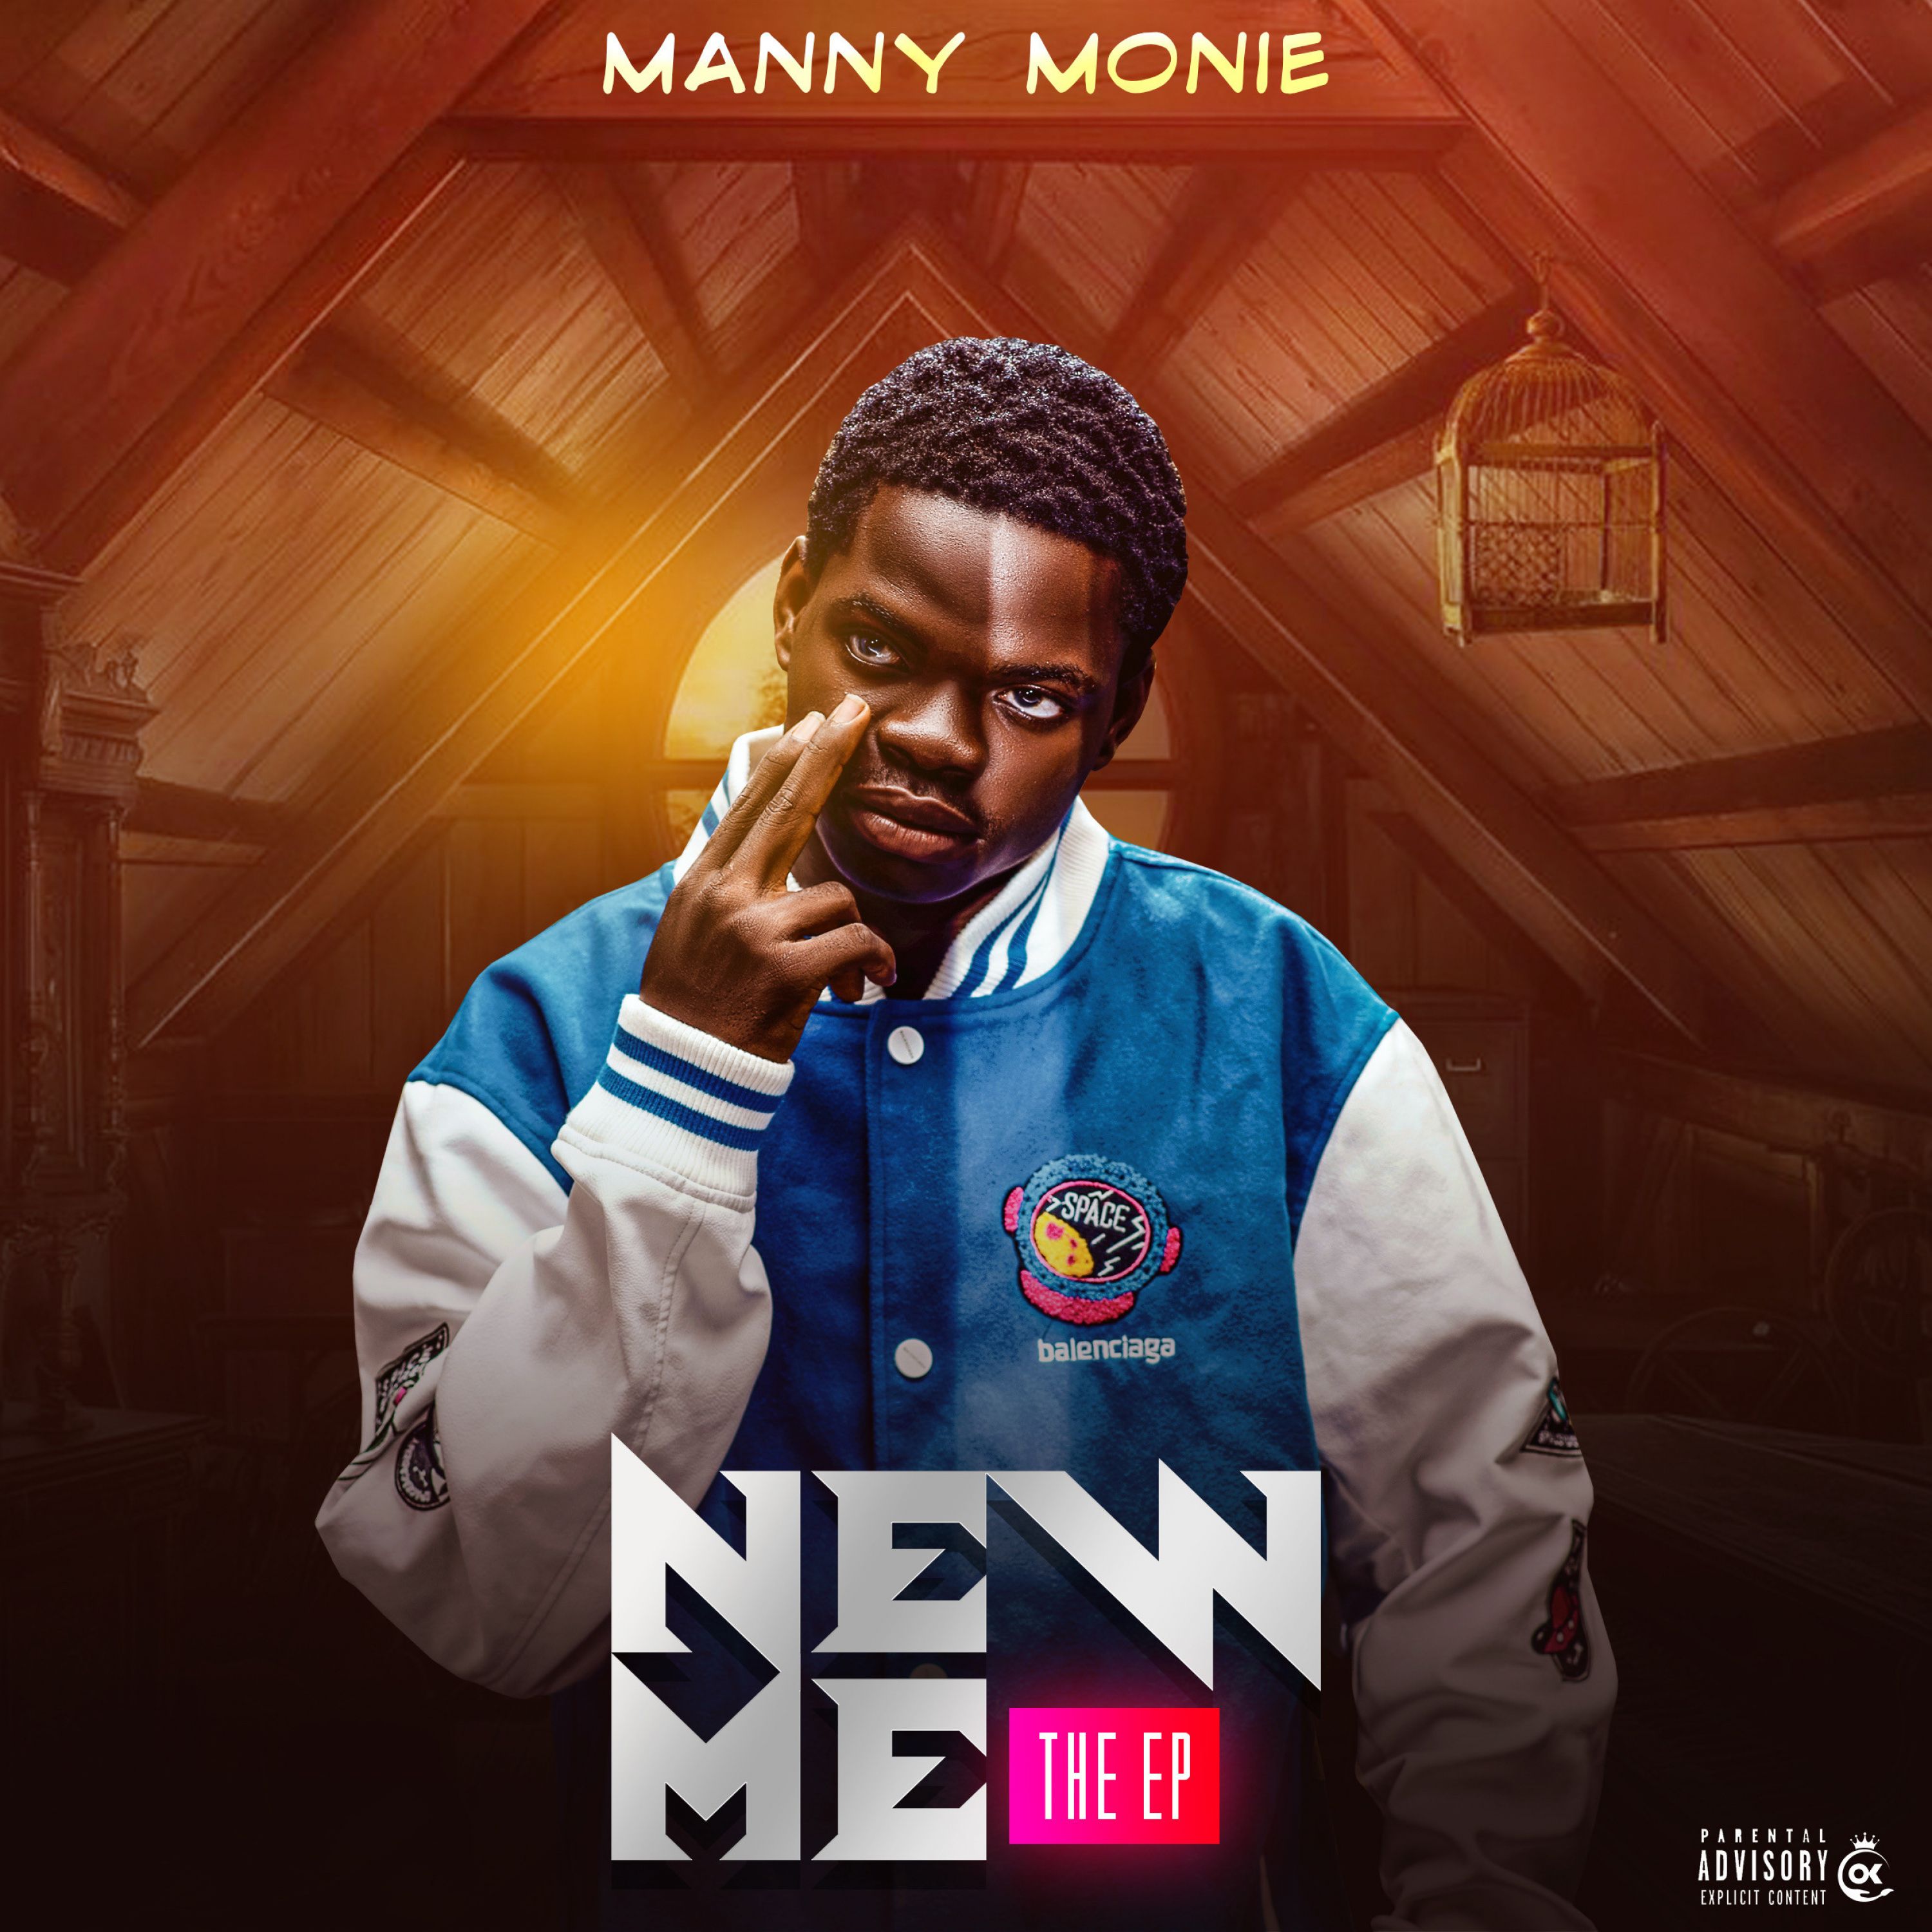 manny monie - Connect